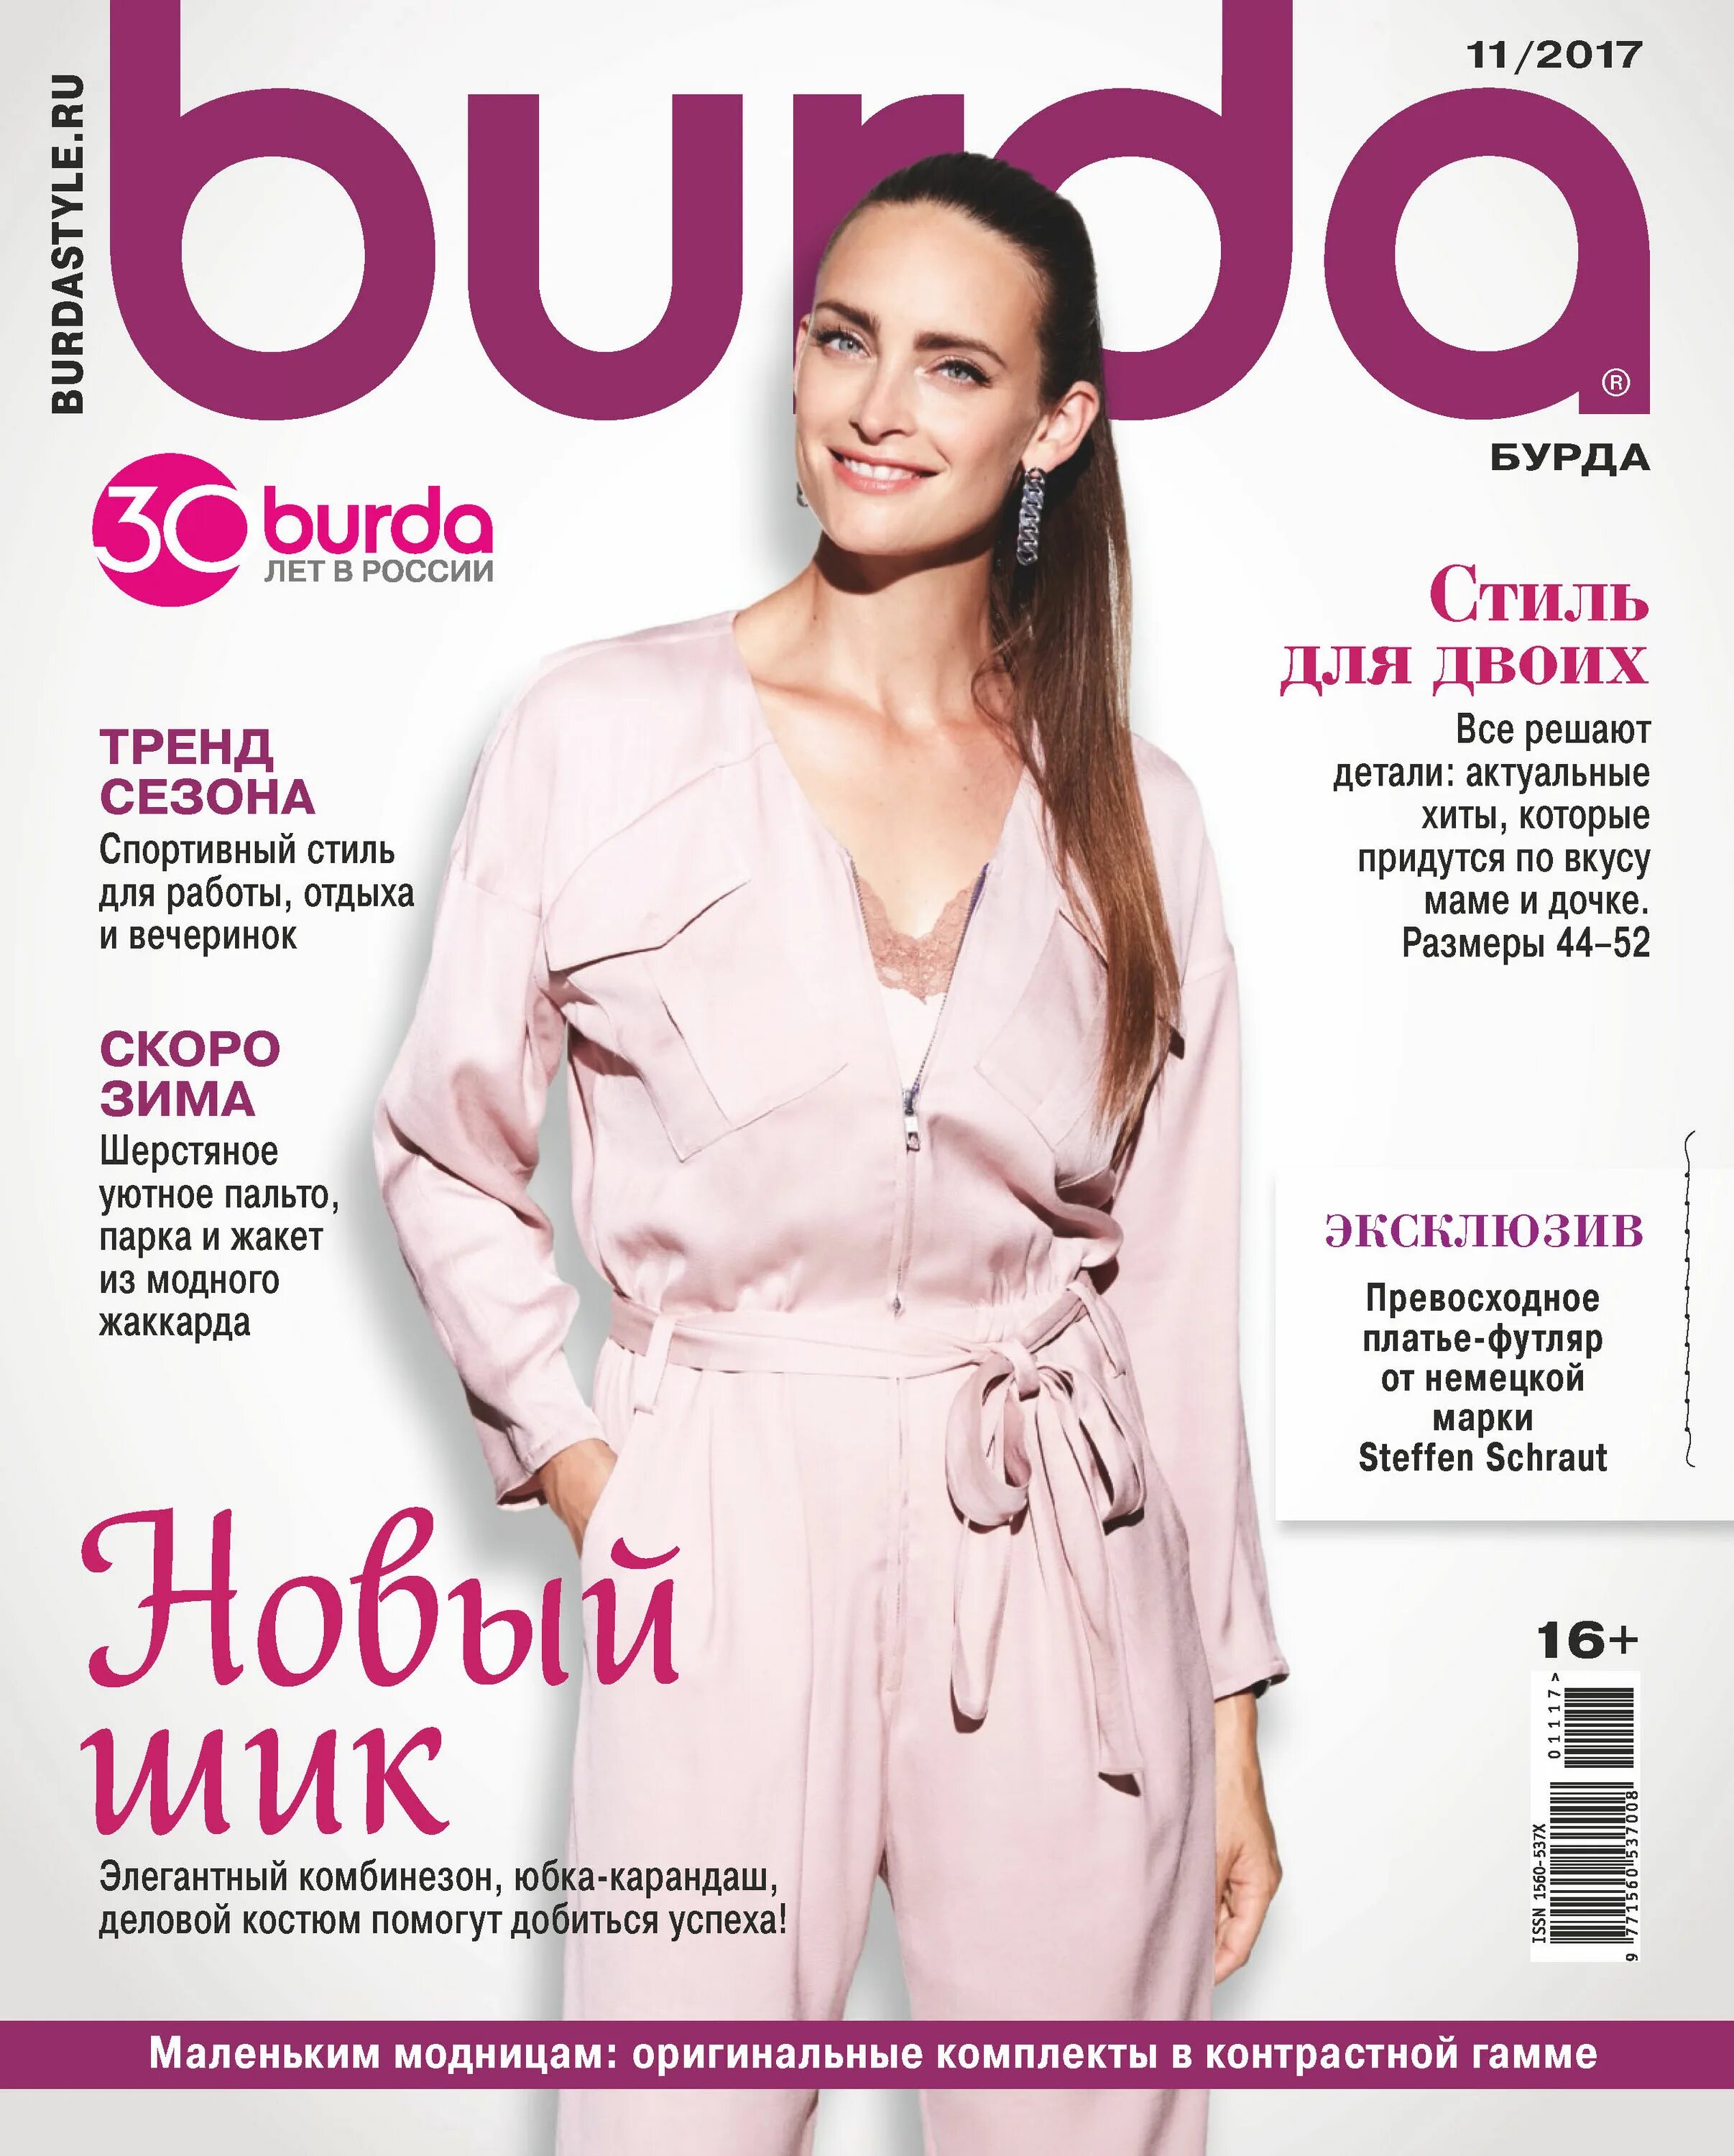 Бурда. Журнал мод. Обложки журнала Burda. Бурда 11 2017.